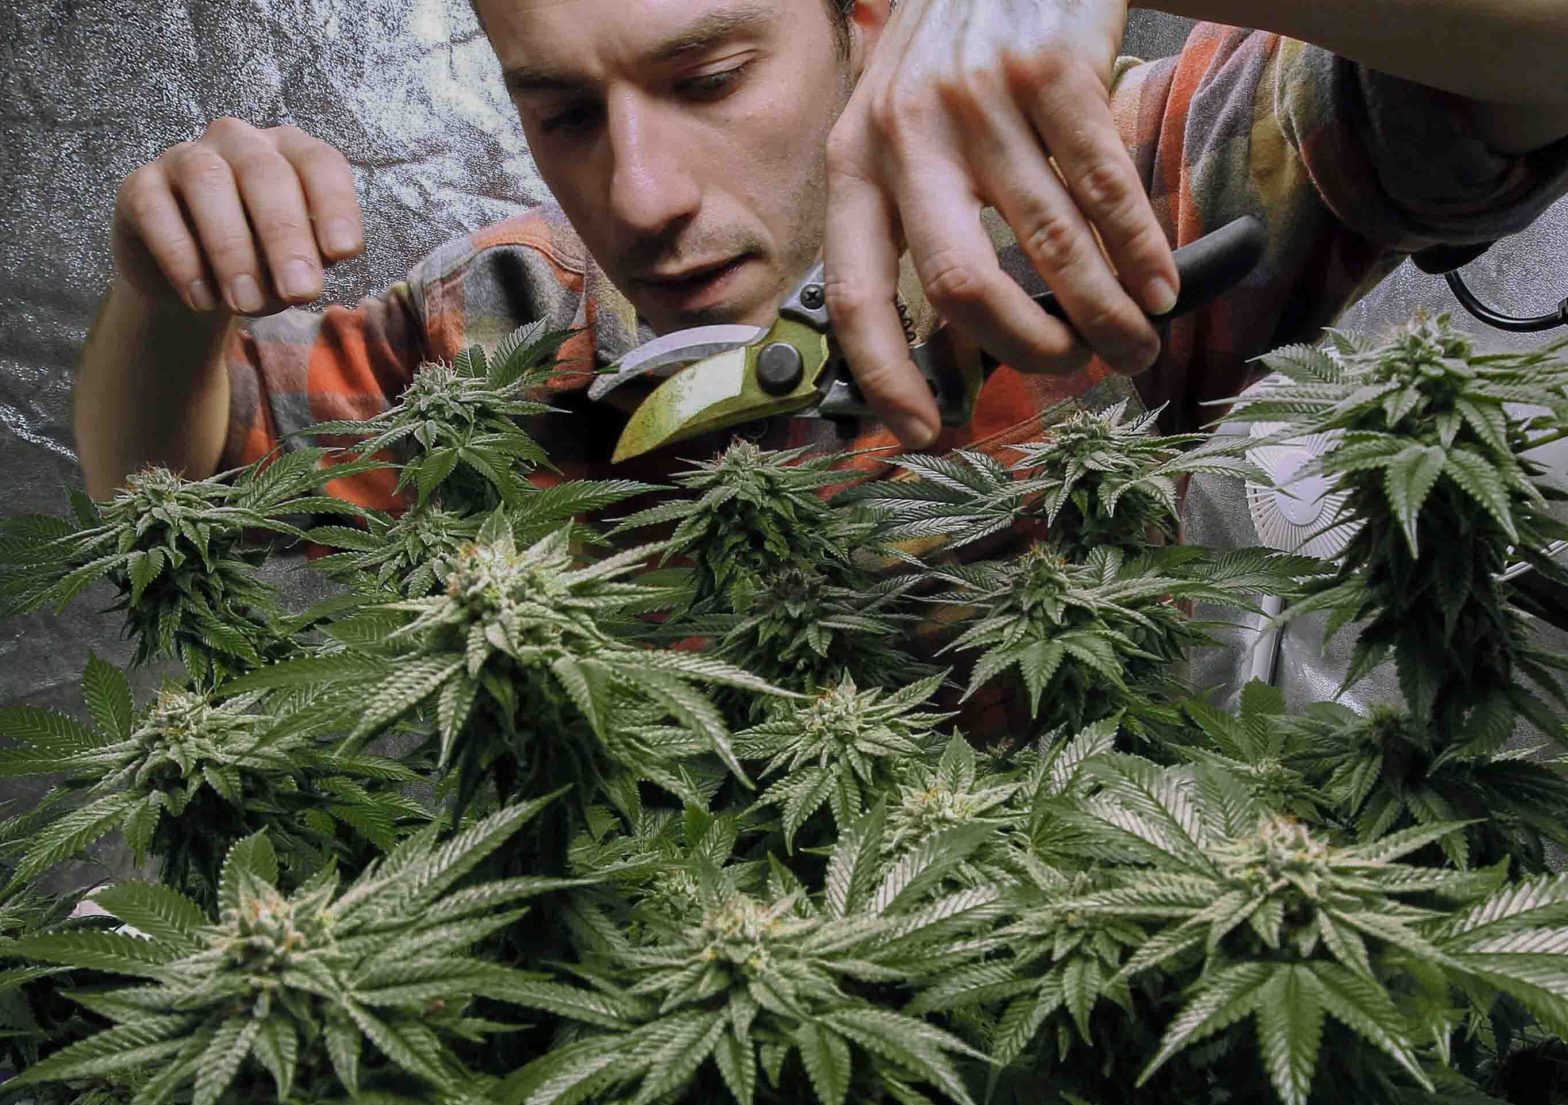 New York Lawmakers Agree to Legalize Recreational Marijuana